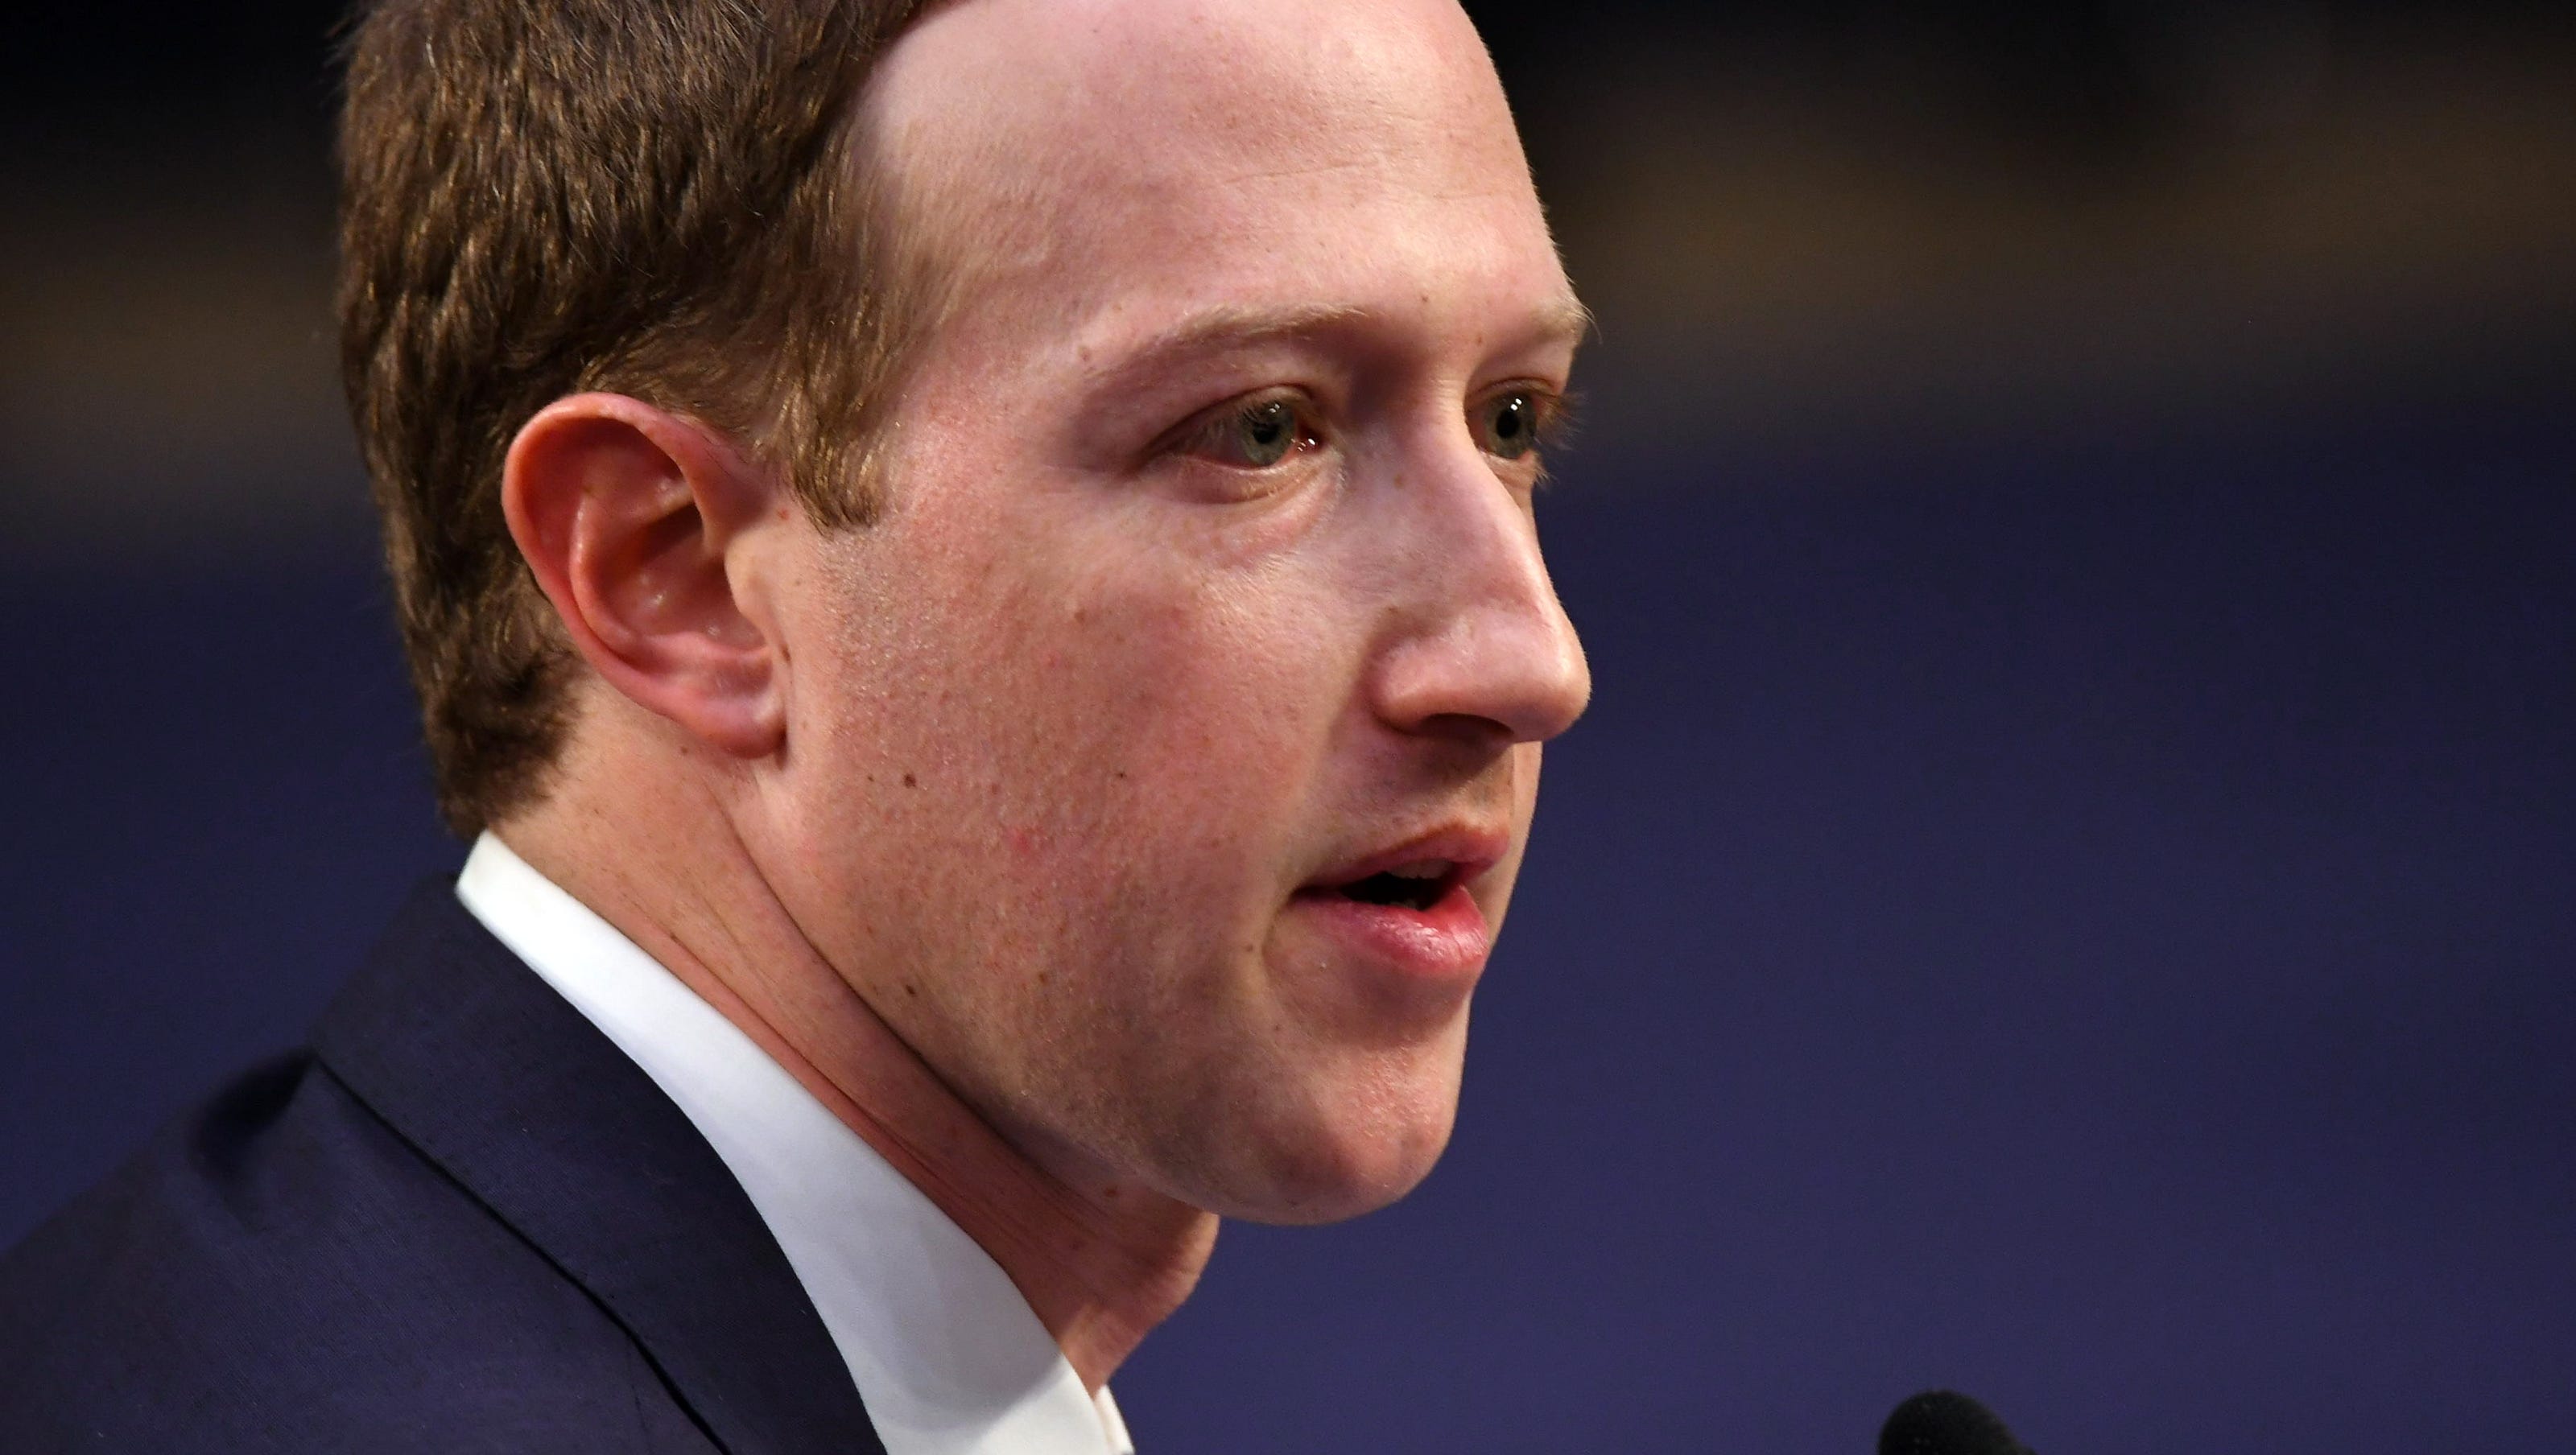 Mark Zuckerberg and Facebook team take heat for massive data breach